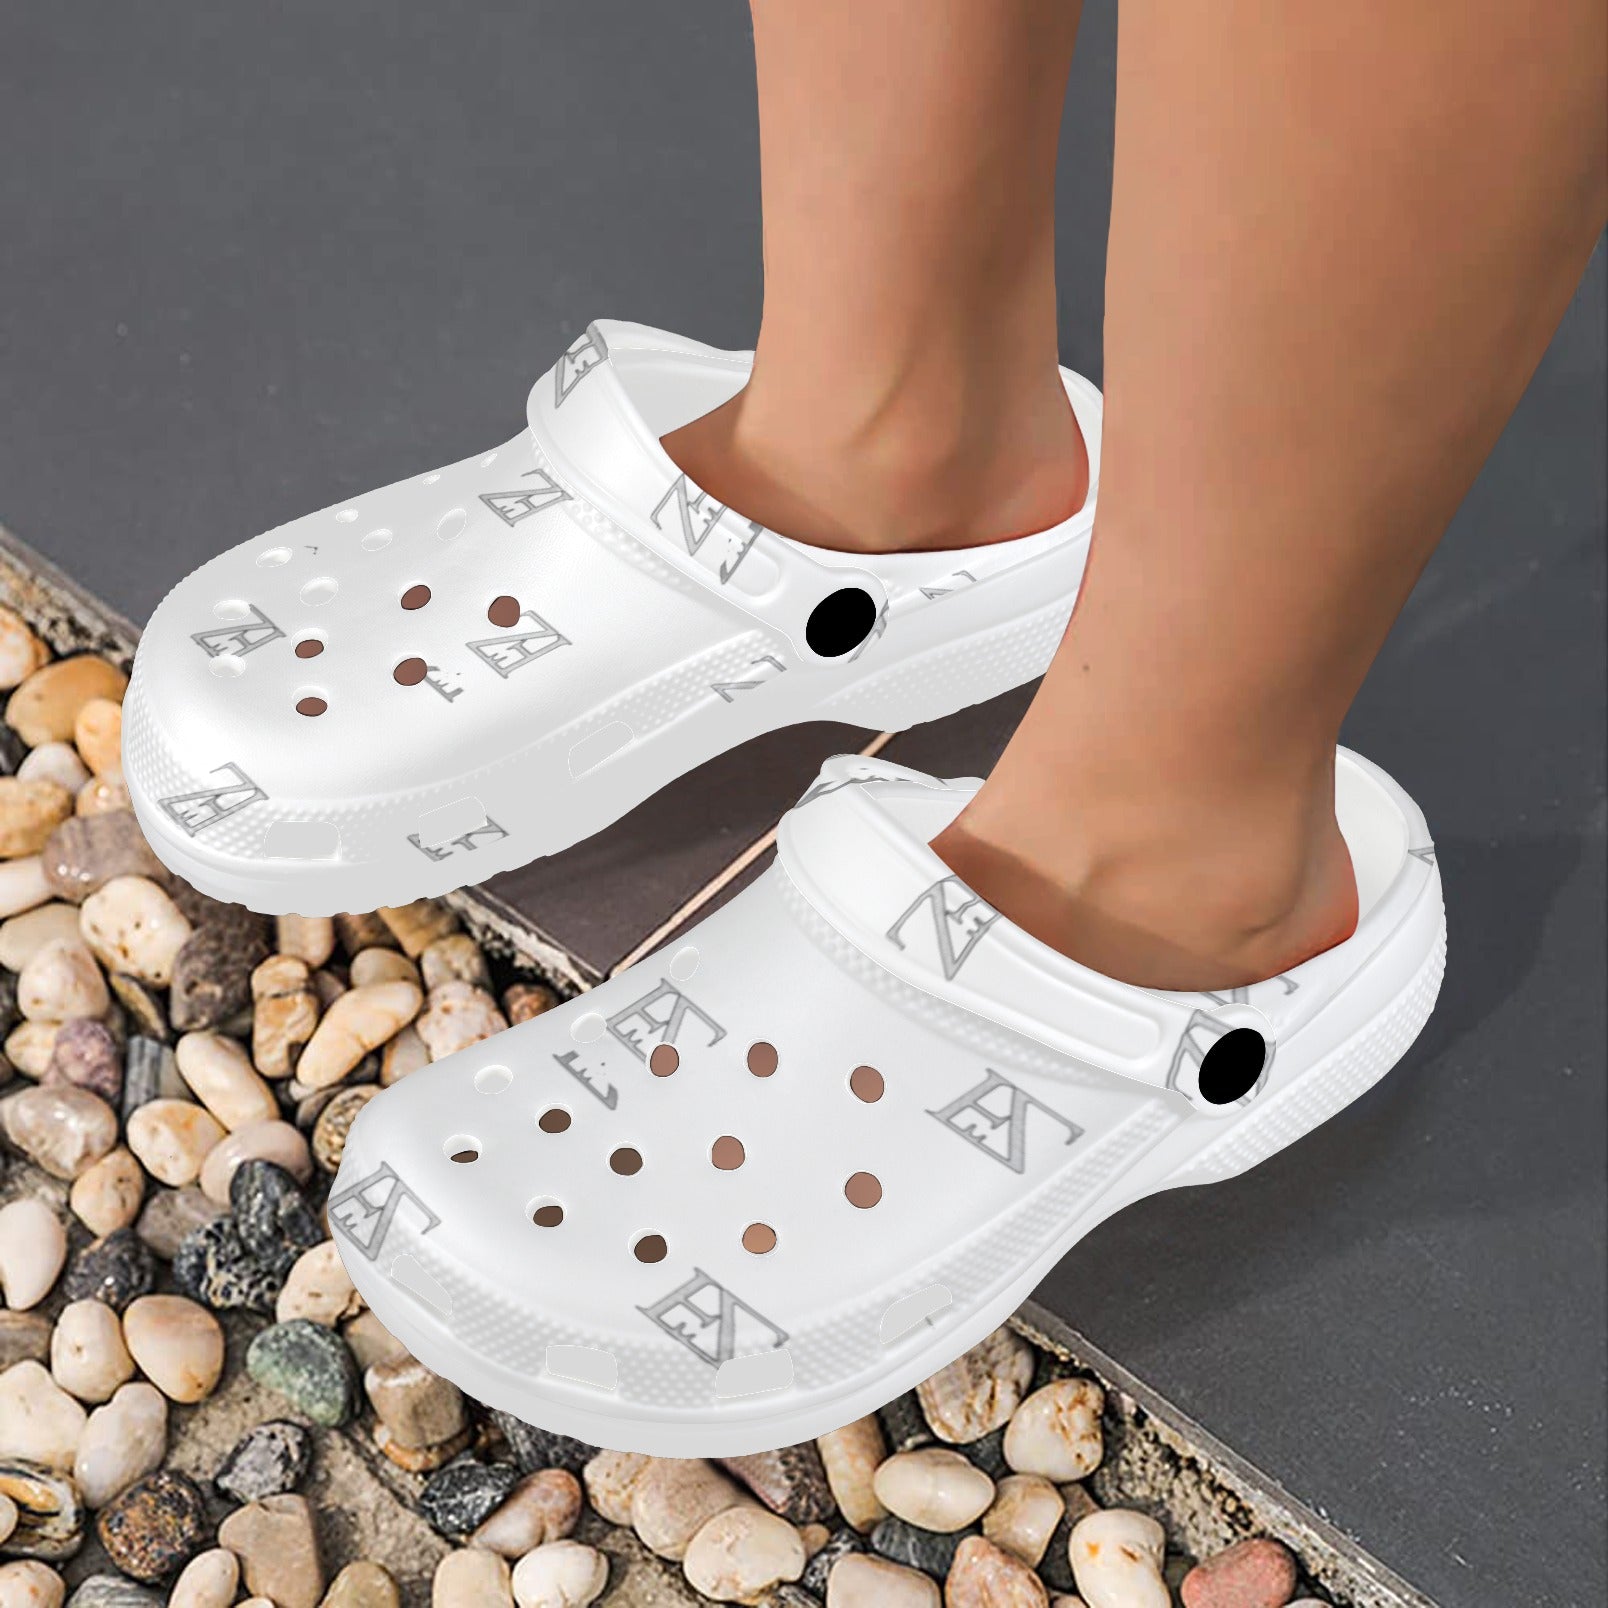 fz unisex sandals - white custom print adults clogs